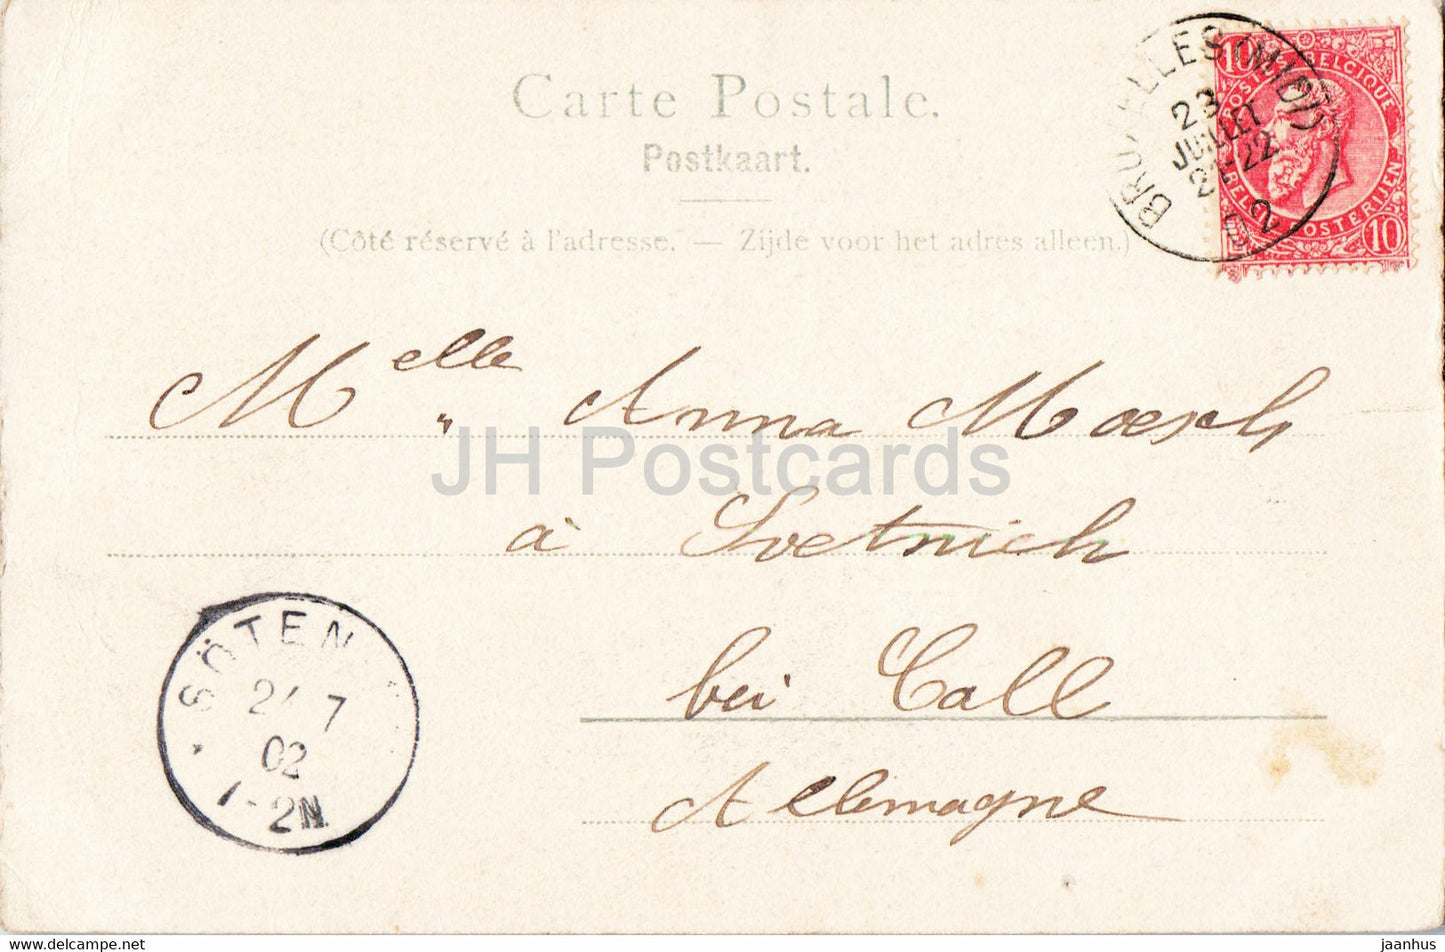 Brüssel - Brüssel - Theatre Royal du Parc - alte Postkarte - 1902 - Belgien - gebraucht